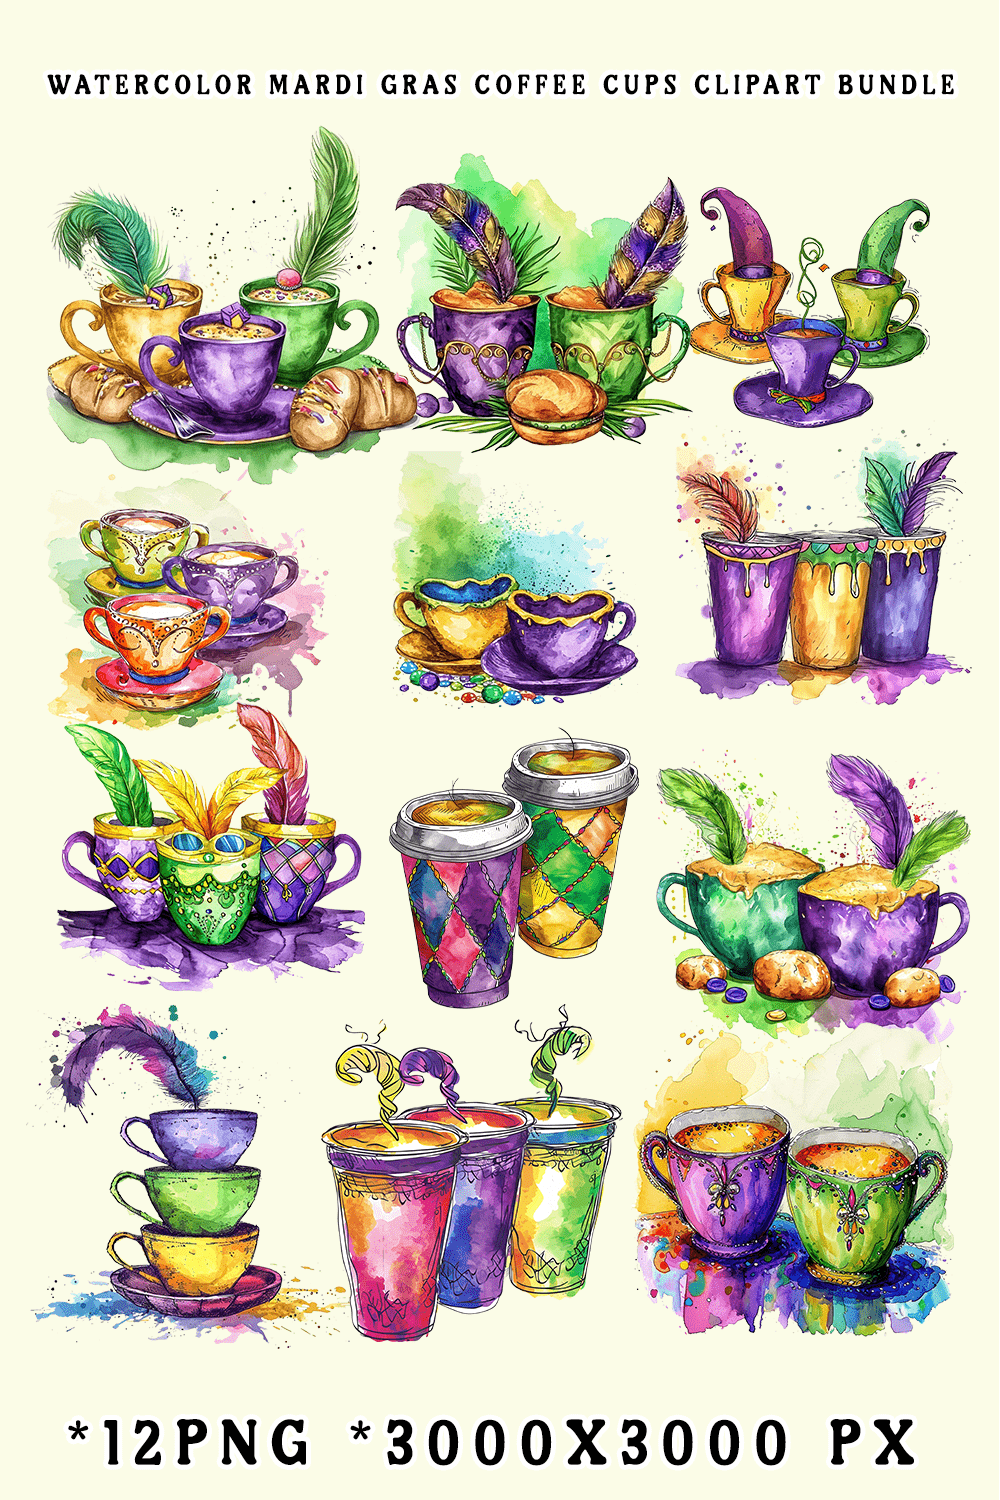 Watercolor Mardi Gras Coffee Cups Clipart Bundle pinterest preview image.